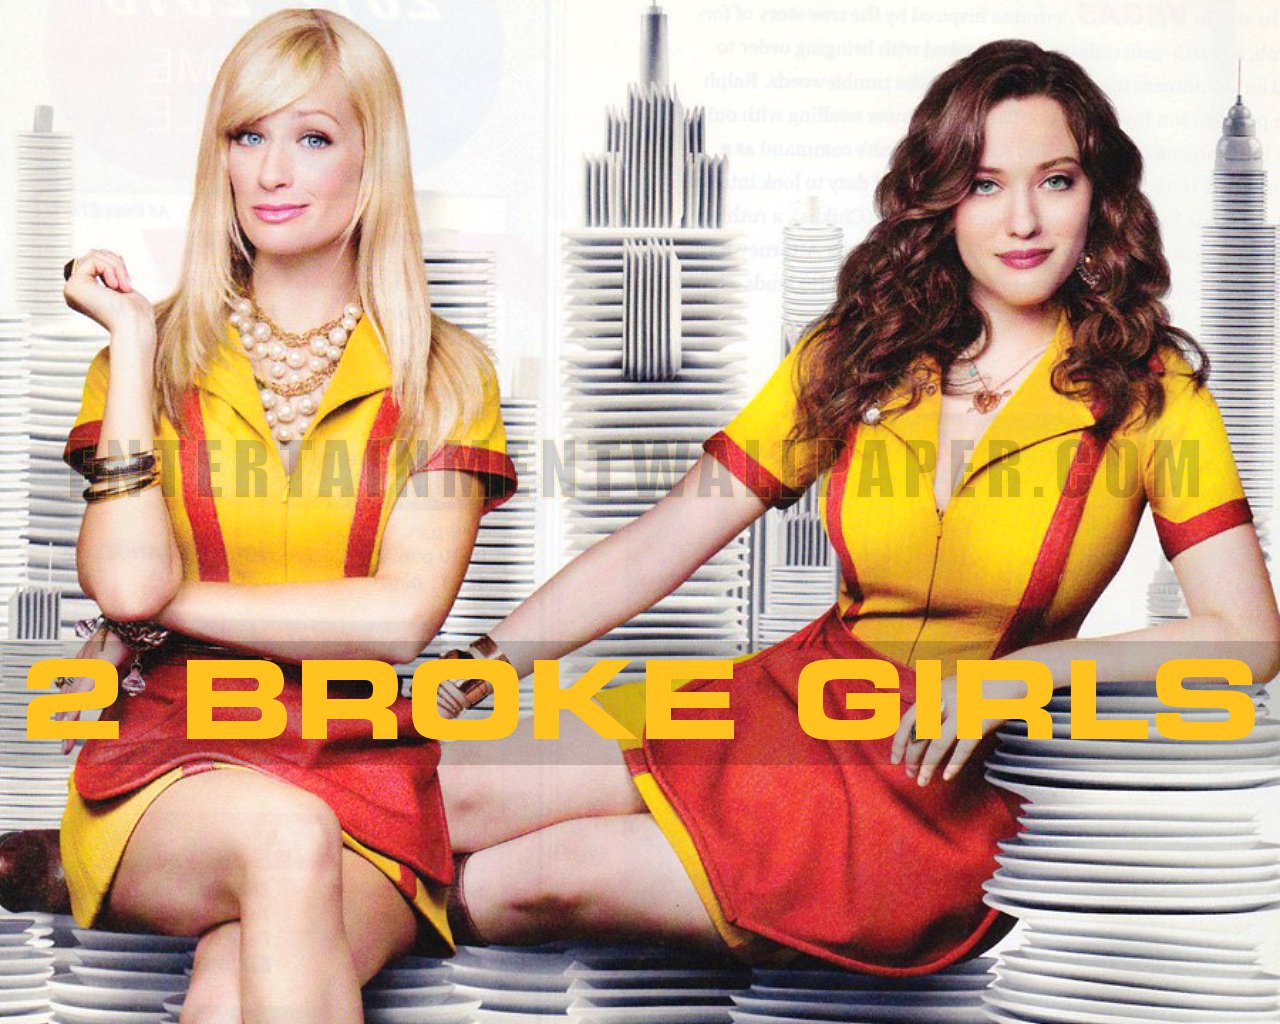 2 Broke girls